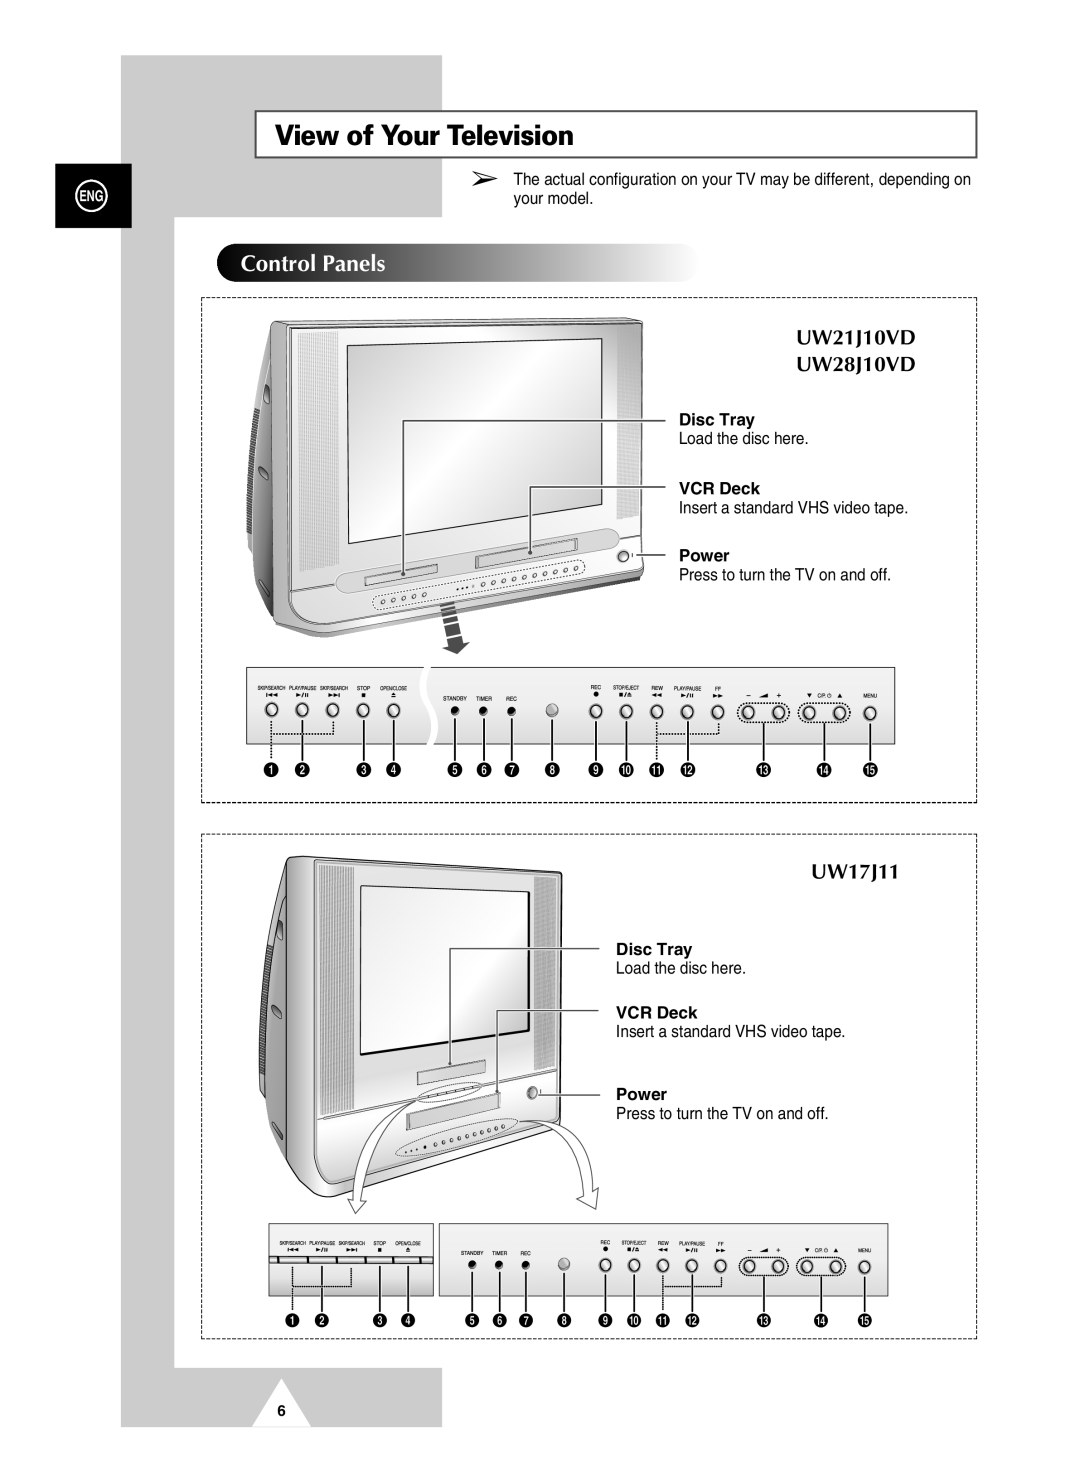 Samsung UW28J10VD5XXEG View of Your Television, Control Panels, Disc Tray, VCR Deck, Power, UW21J10VD UW28J10VD, UW17J11 